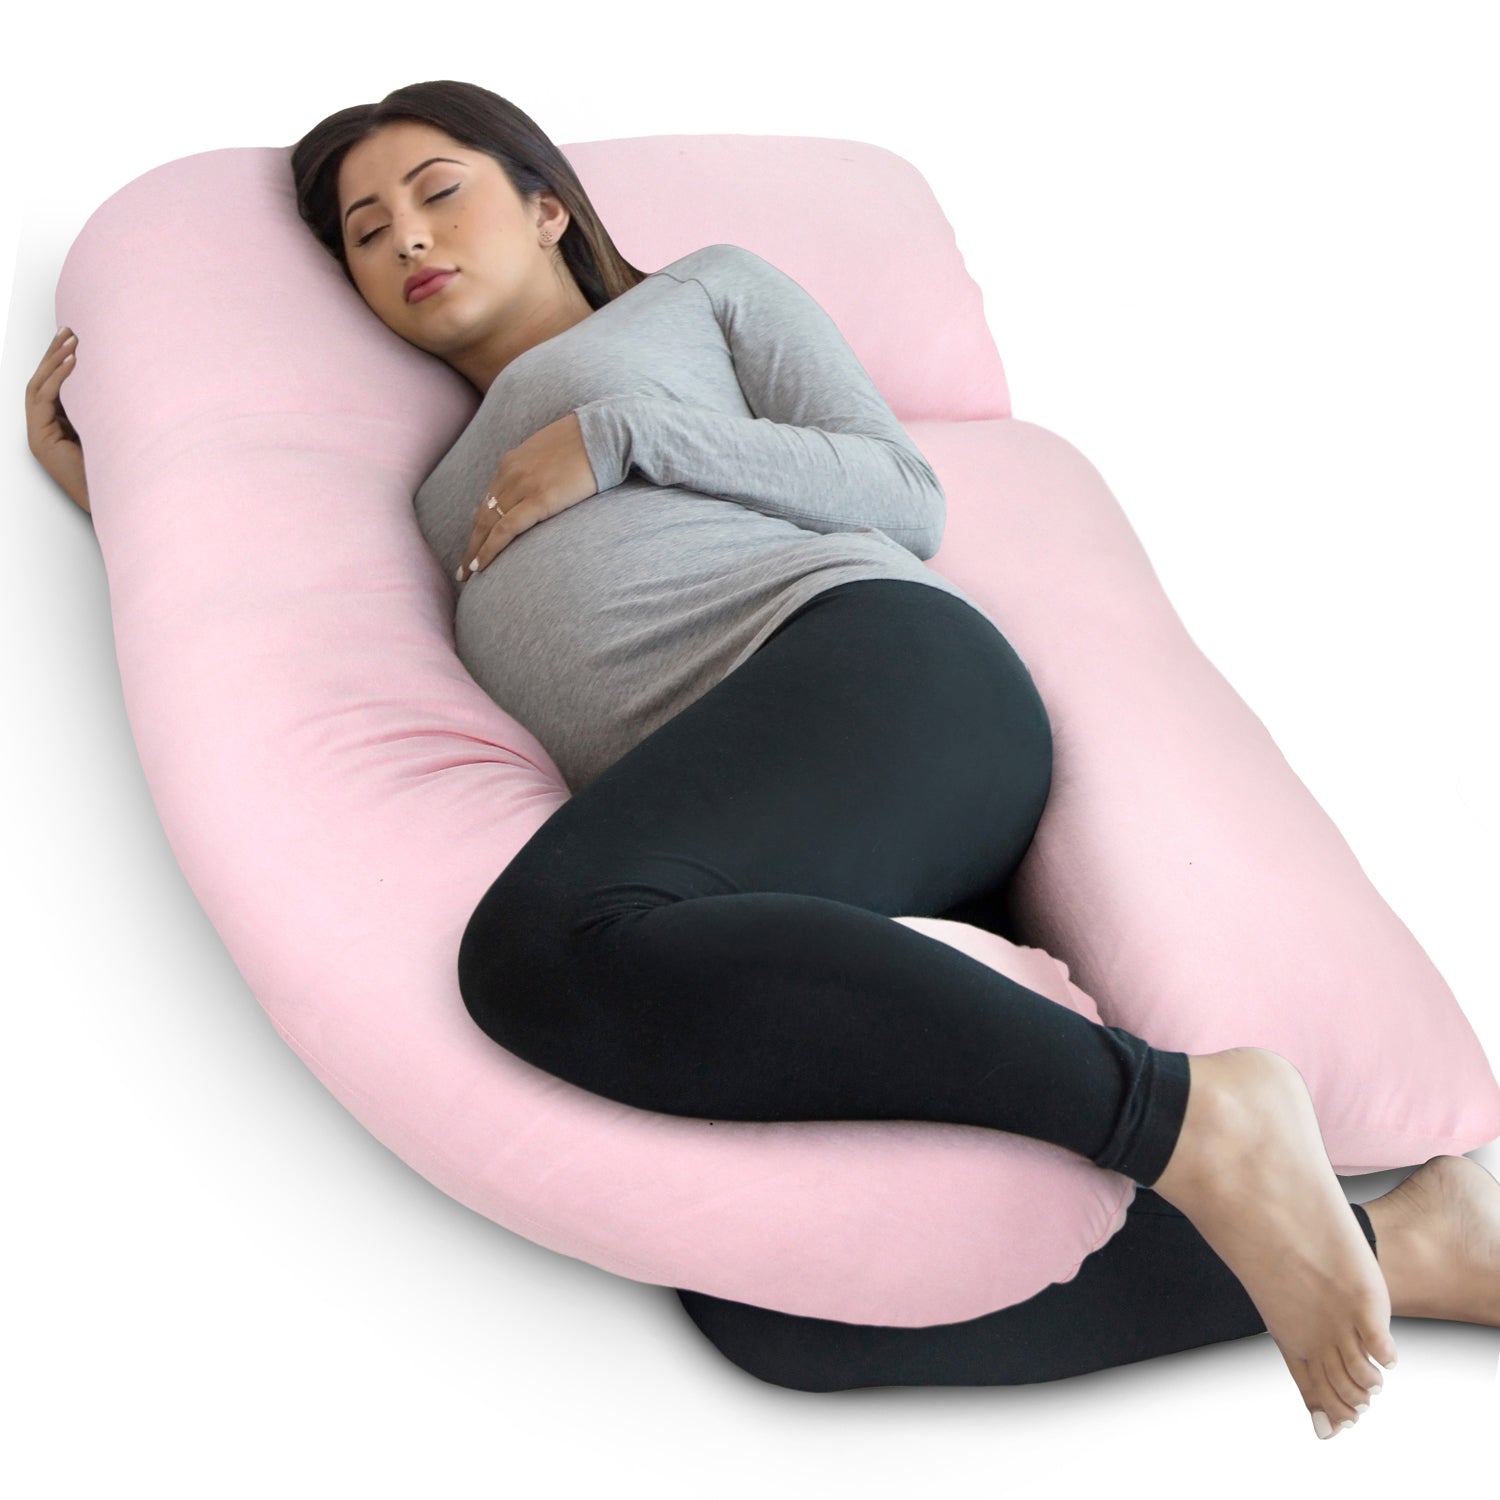 https://www.momjunction.com/wp-content/uploads/product-images/pharmedoc-pregnancy-pillow_afl323.jpg